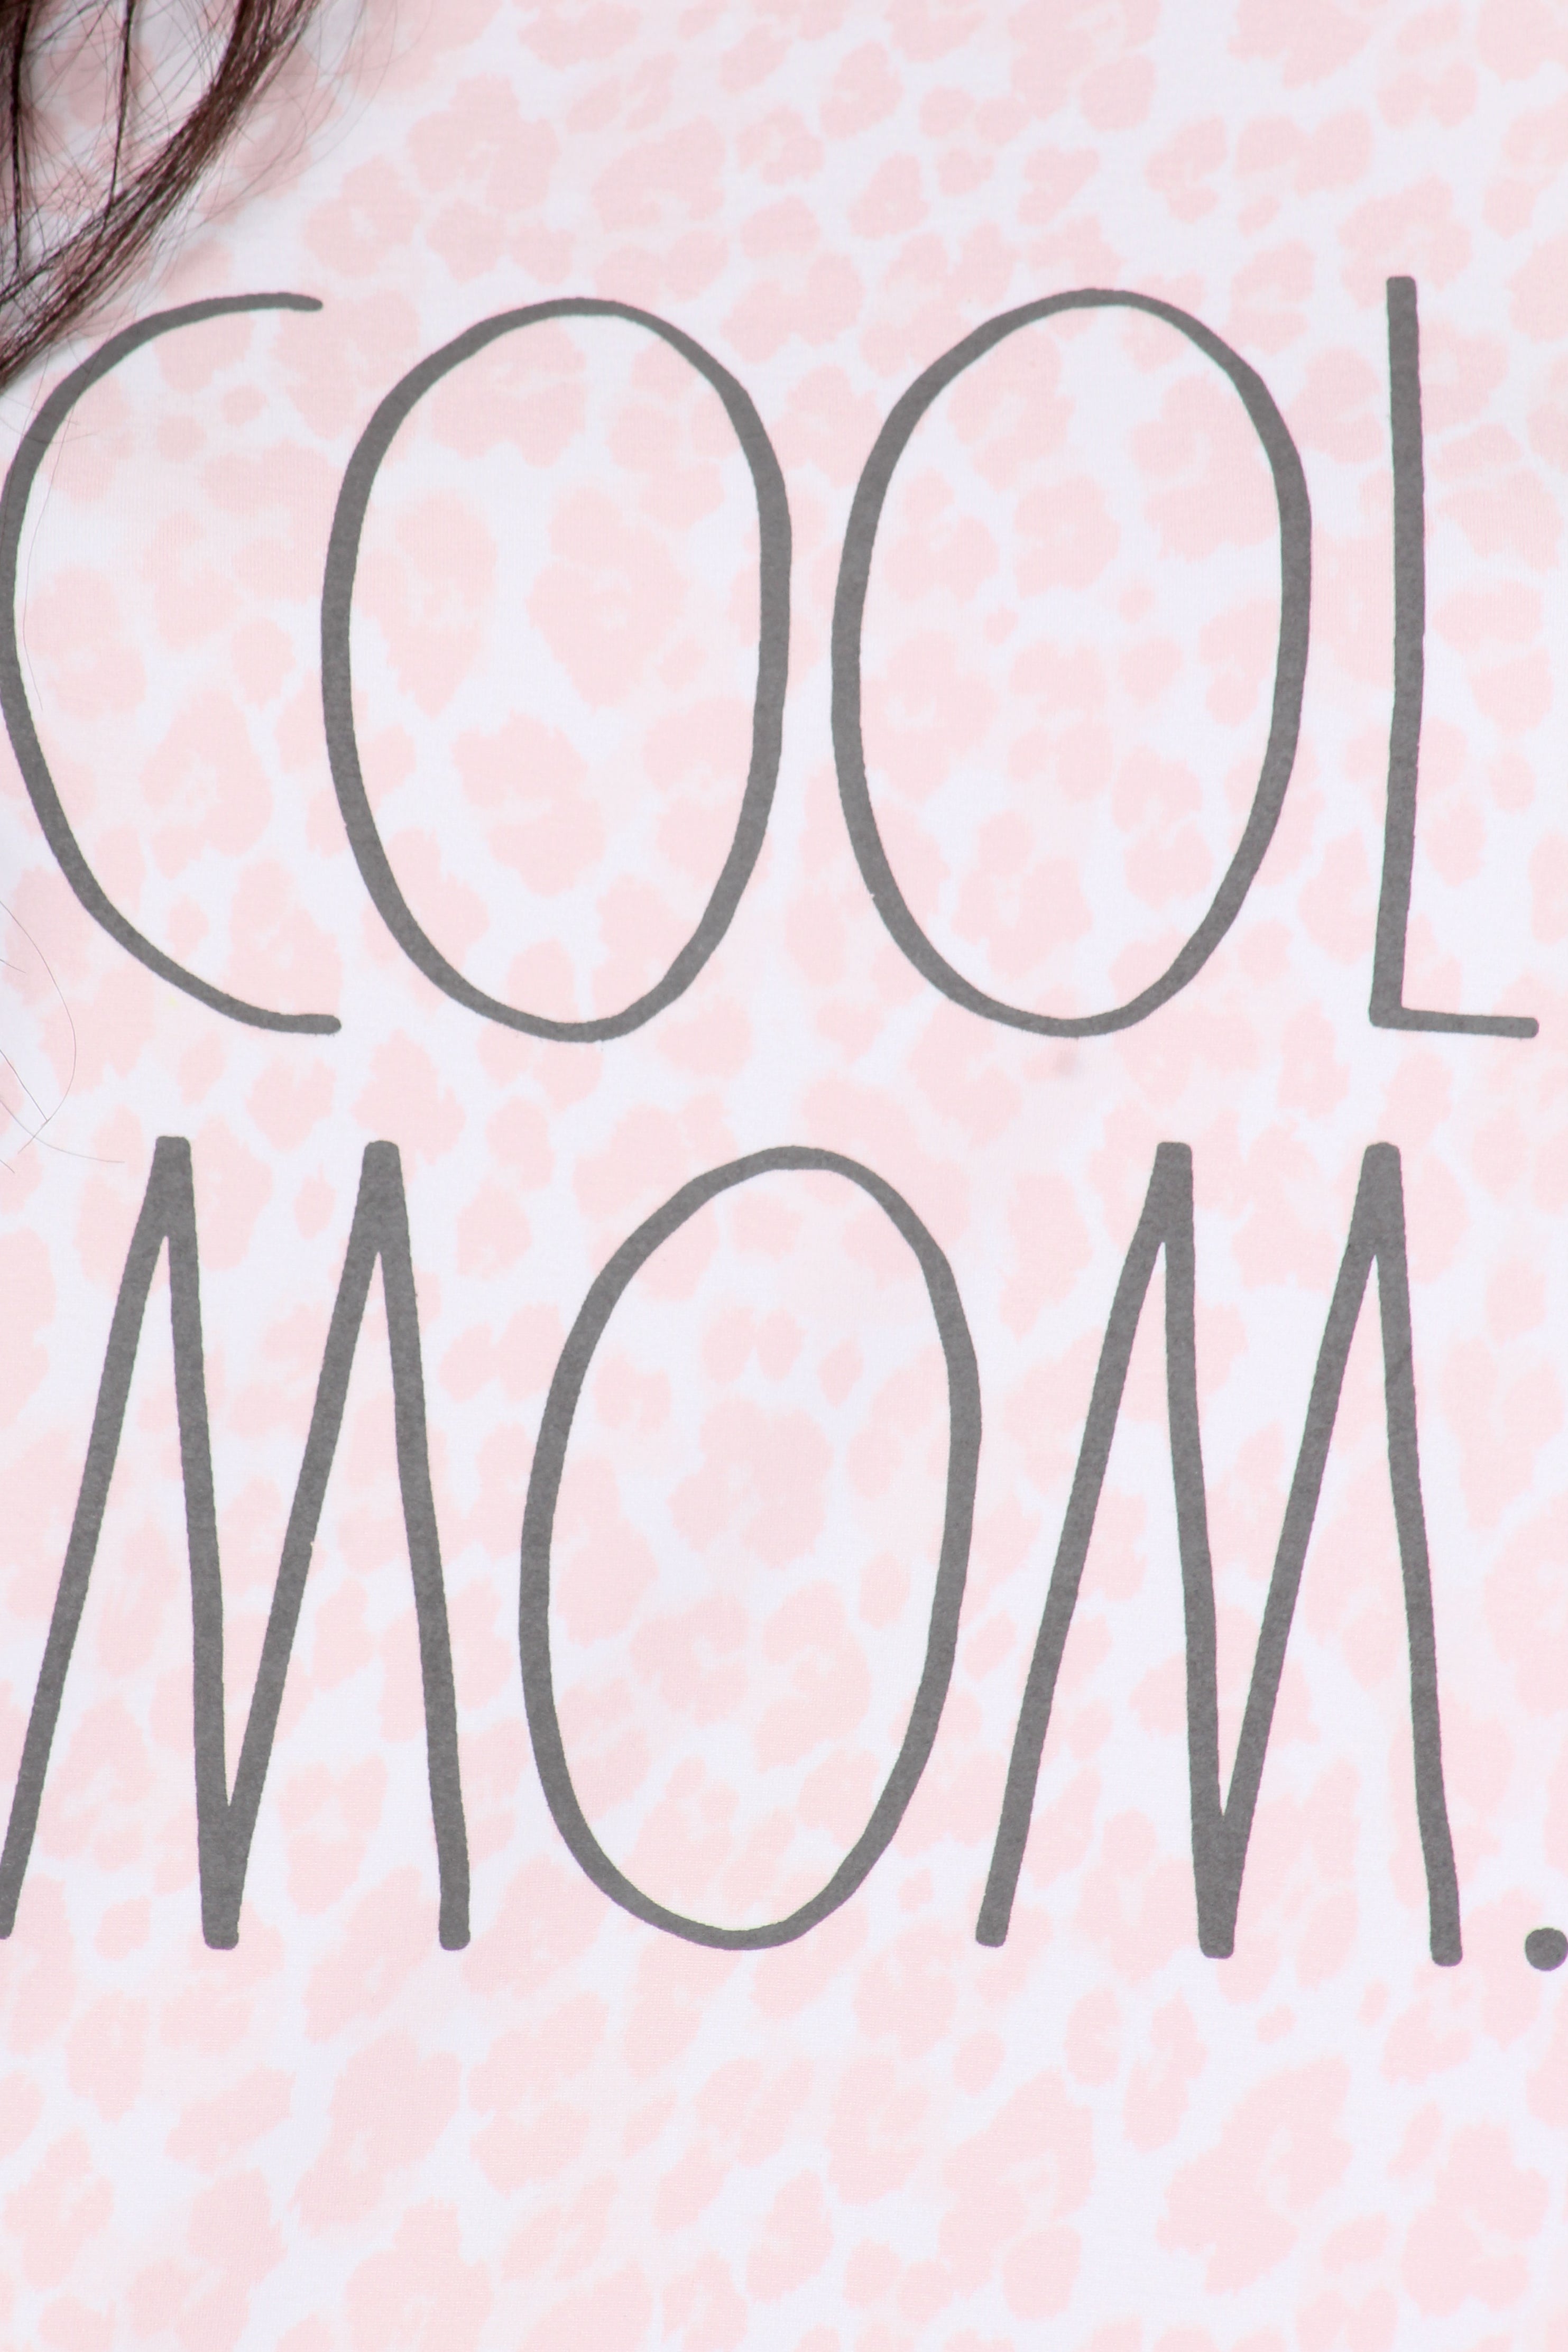 Women's "COOL MOM" Short Sleeve HiLo Nightshirt - Rae Dunn Wear